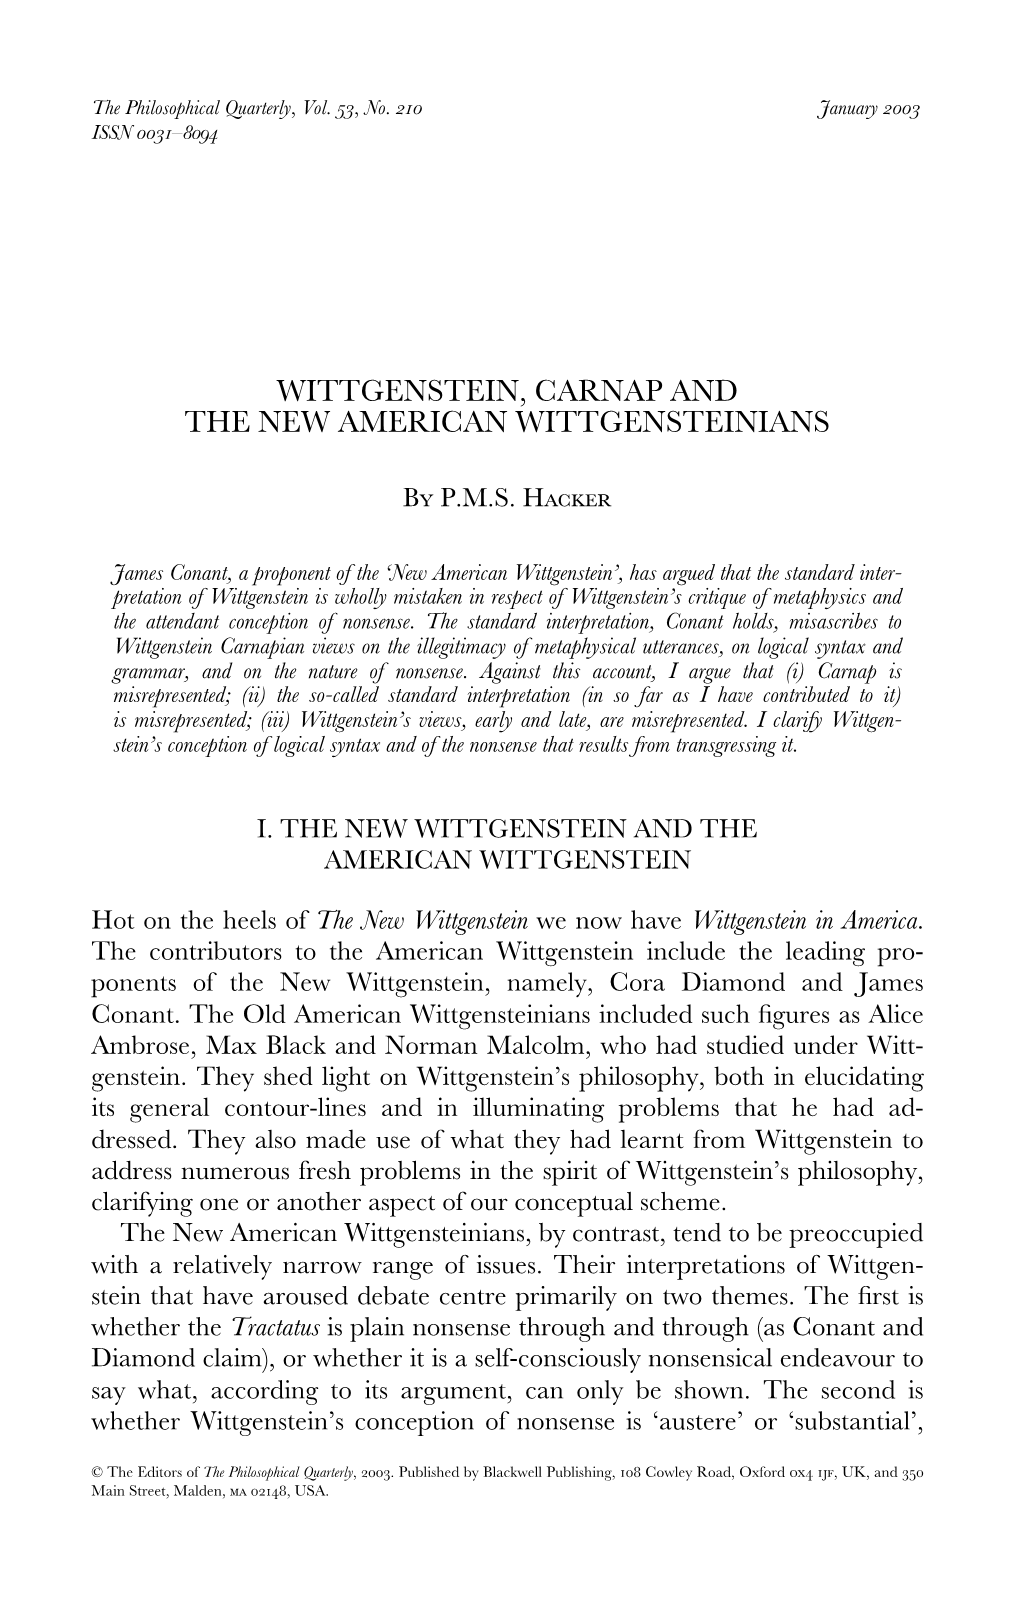 Wittgenstein, Carnap and the New American Wittgensteinians